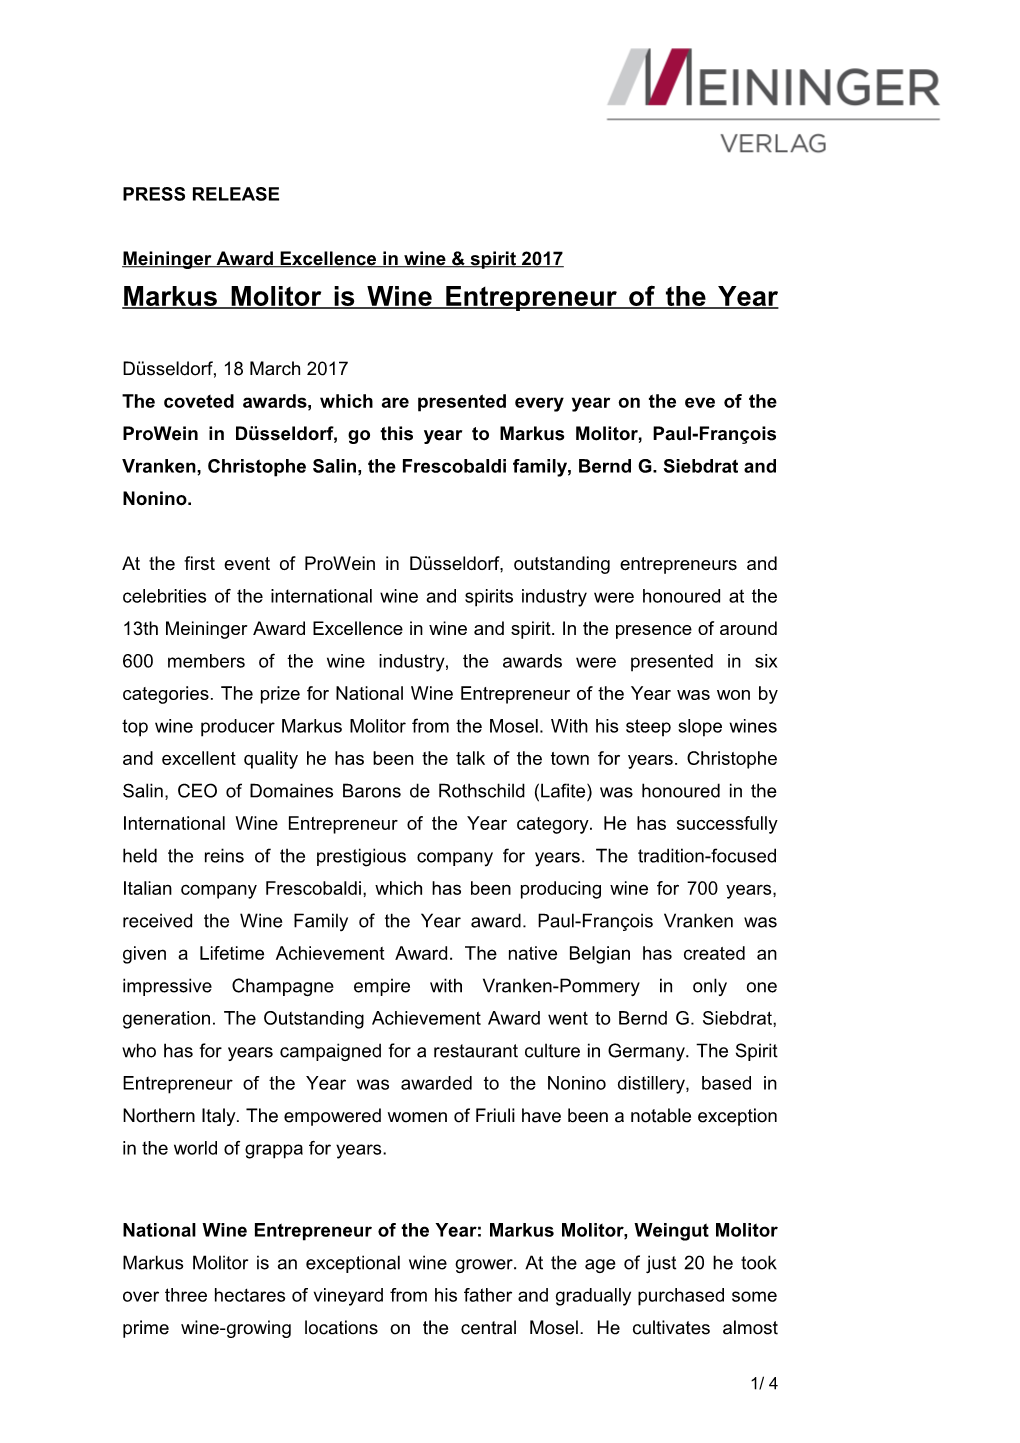 Meininger Award Excellence in Wine & Spirit 2017